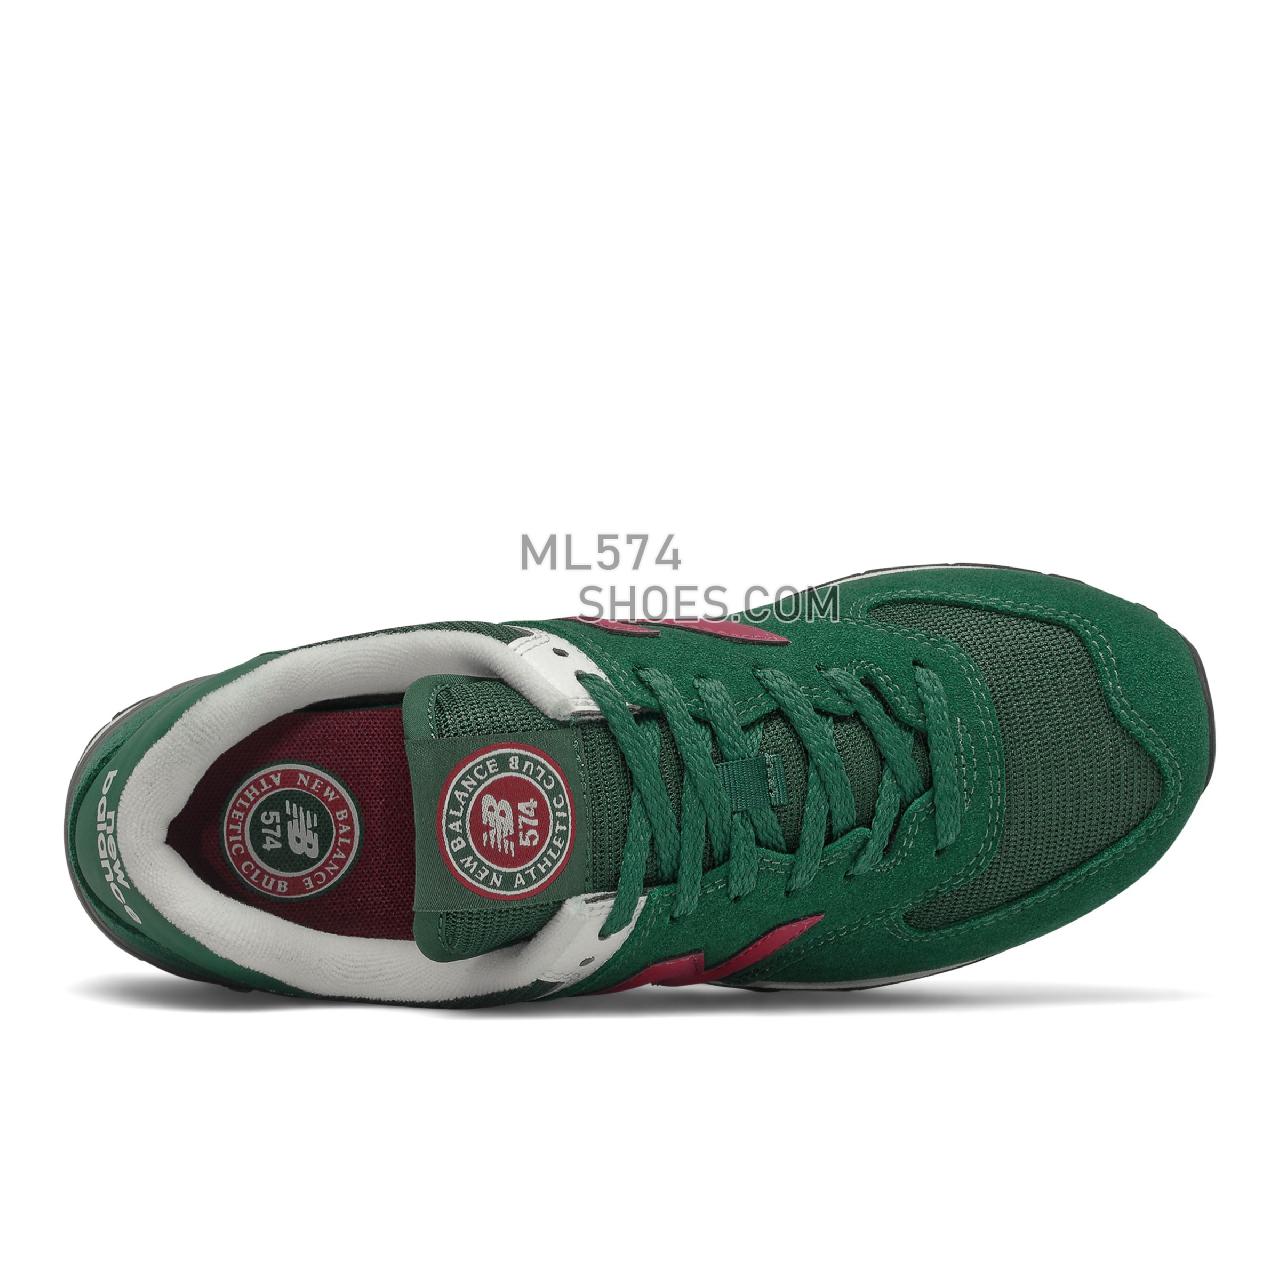 New Balance 574 - Women's Classic Sneakers - Nightwatch Green with Garnet - WL574HF2